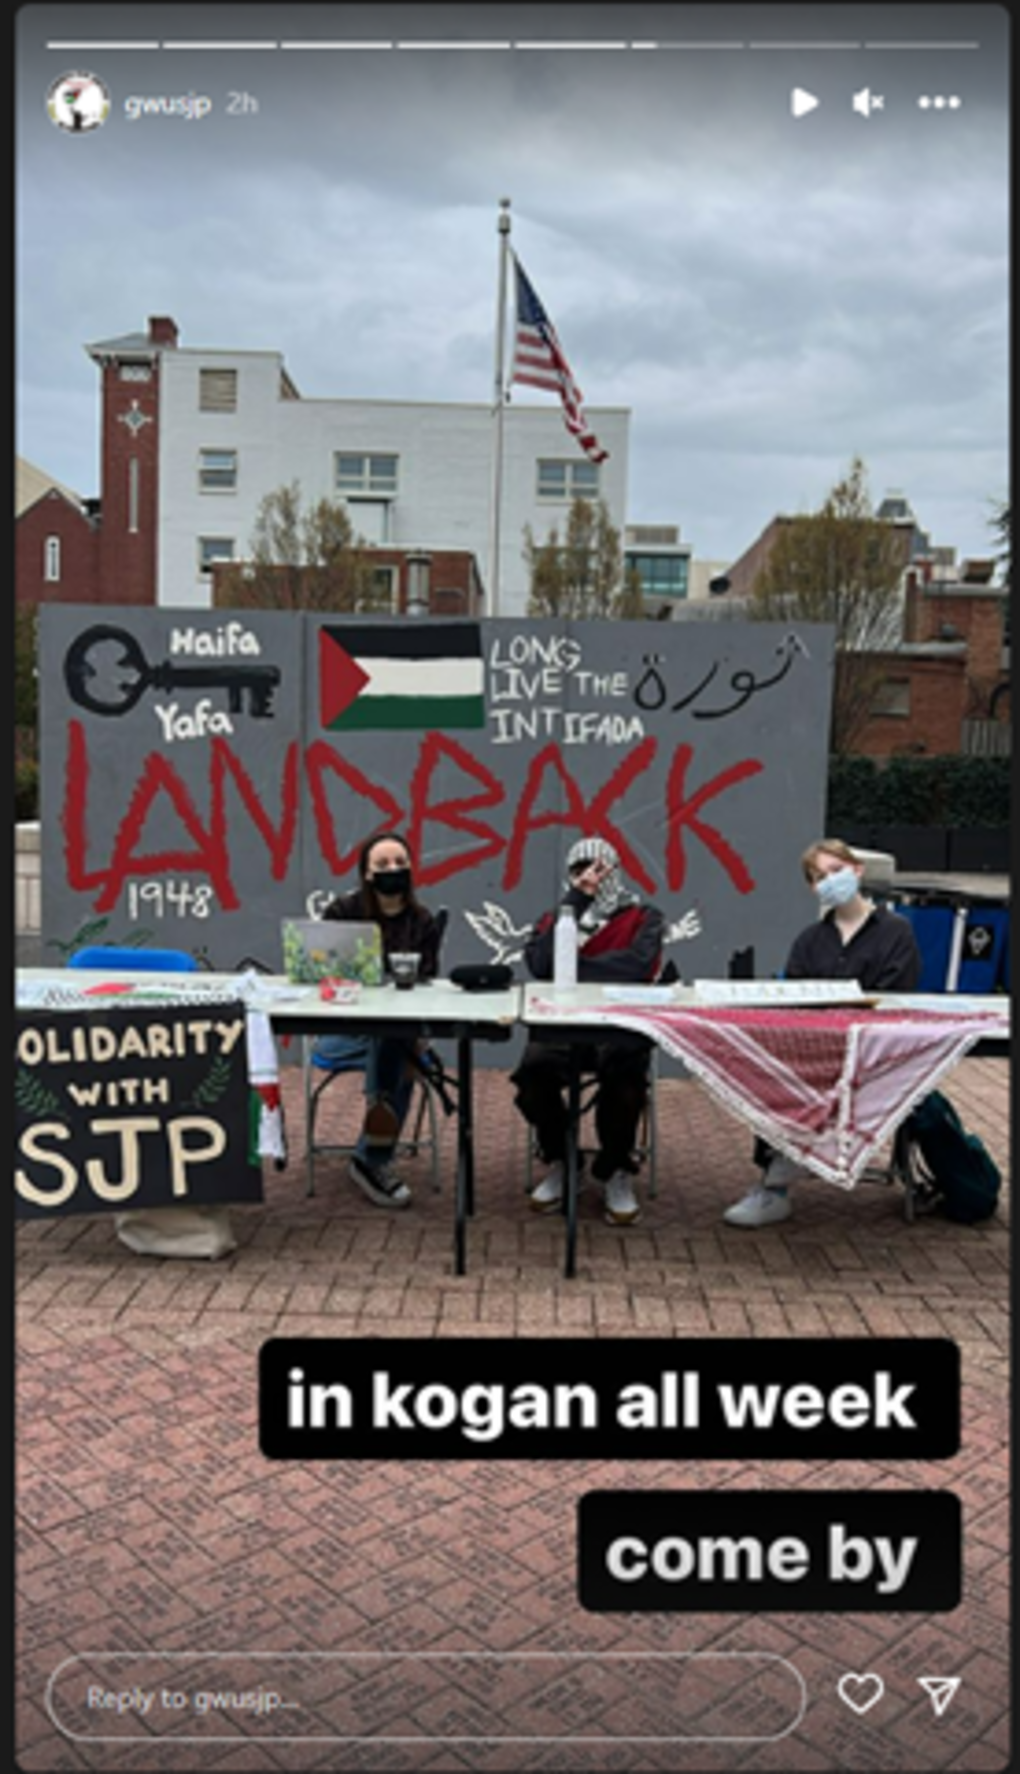 Israeli Apartheid Week (IAW) 2023 Featured Expressions of Antisemitism